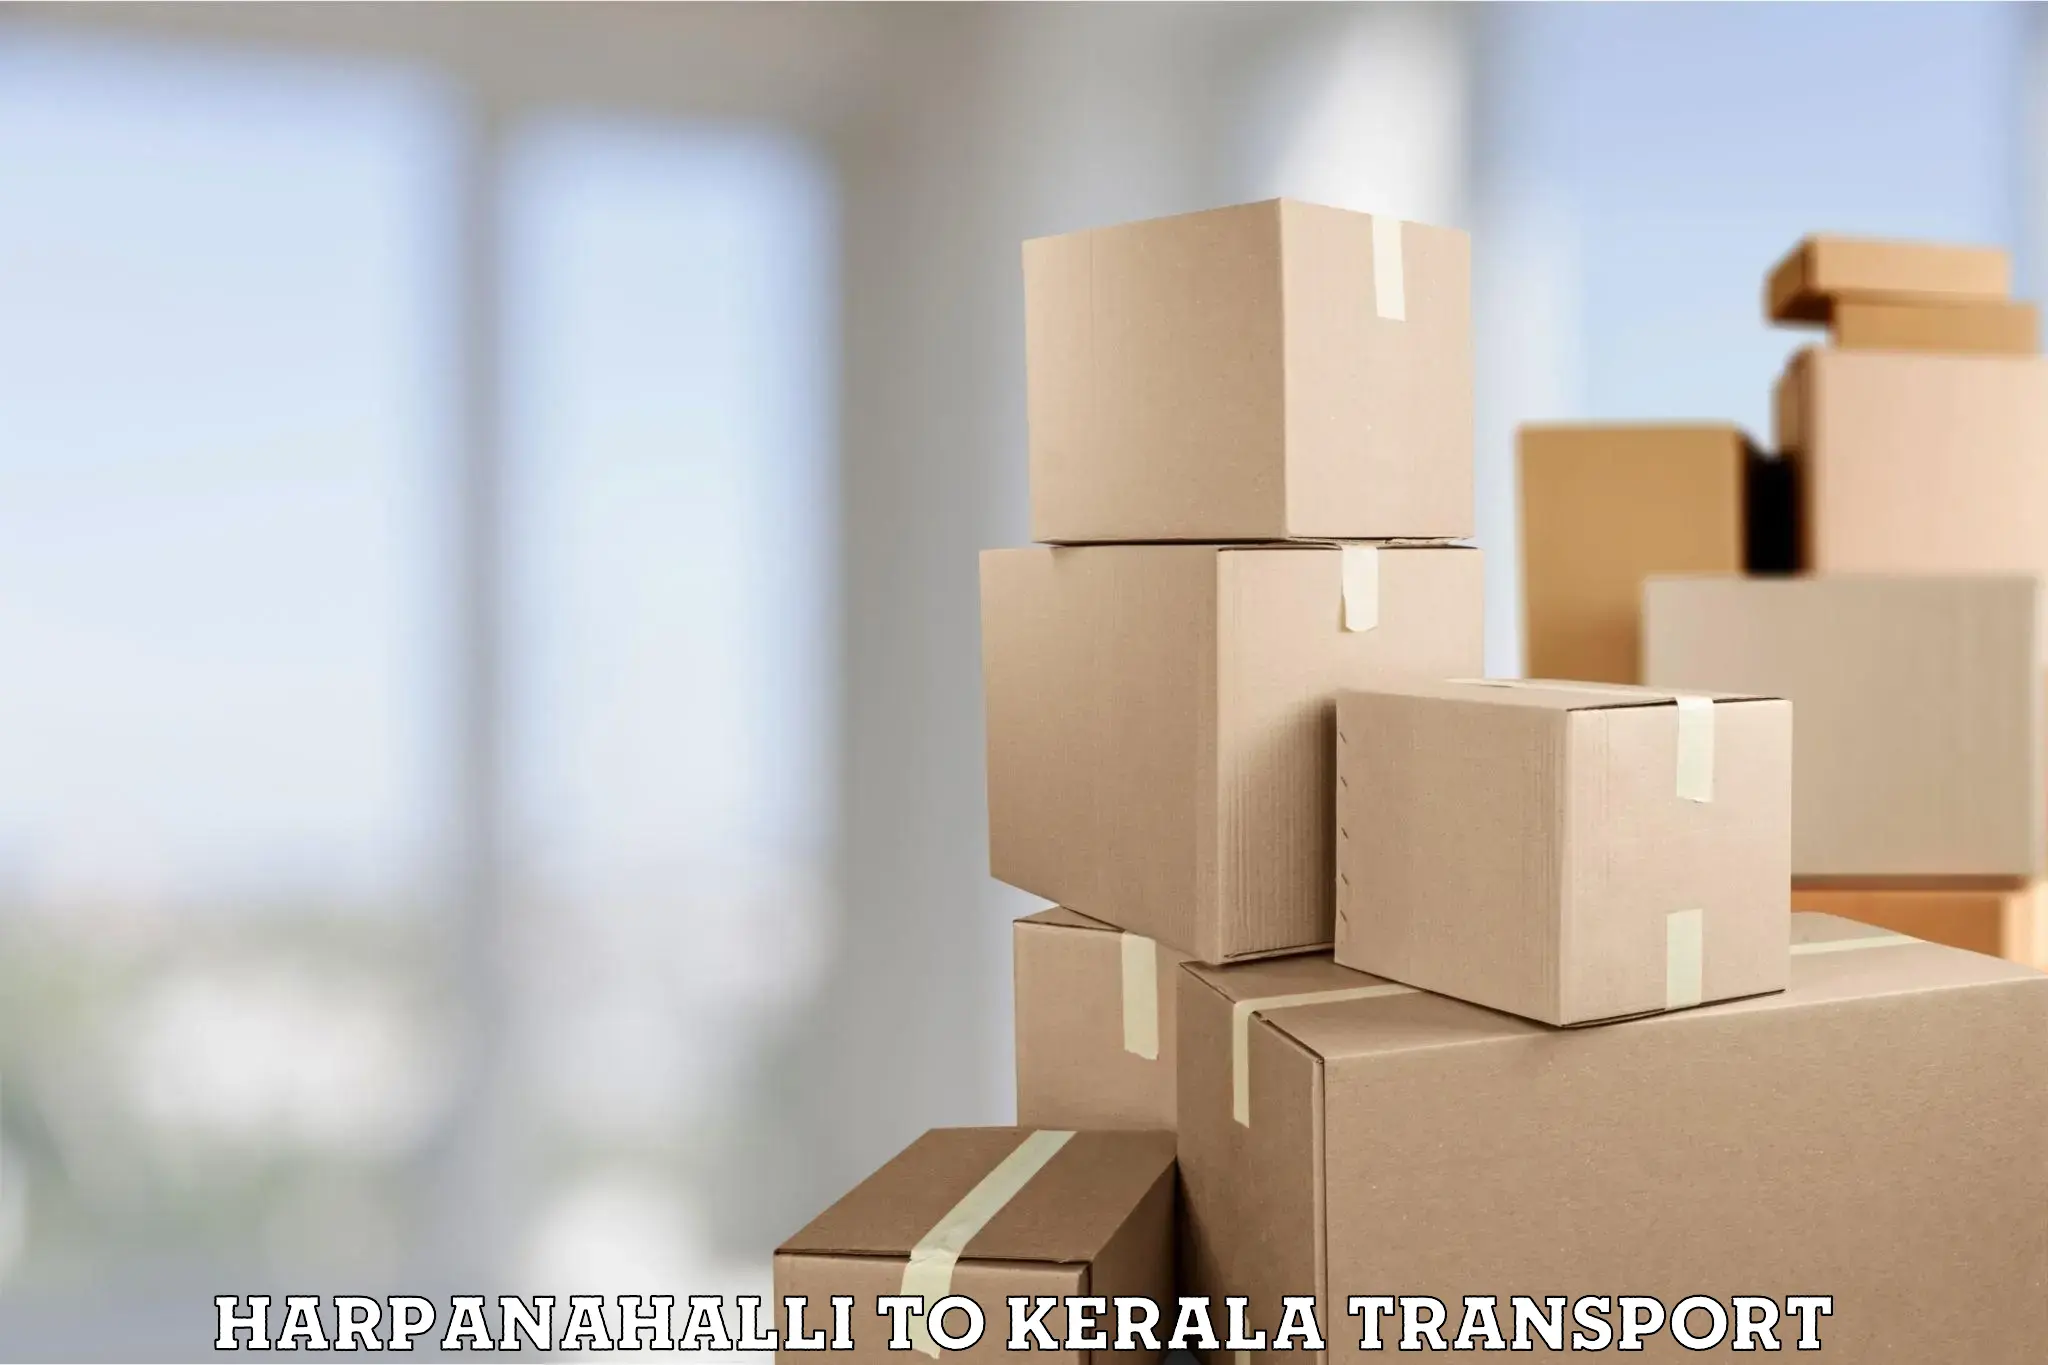 Transport in sharing Harpanahalli to Puthukkad